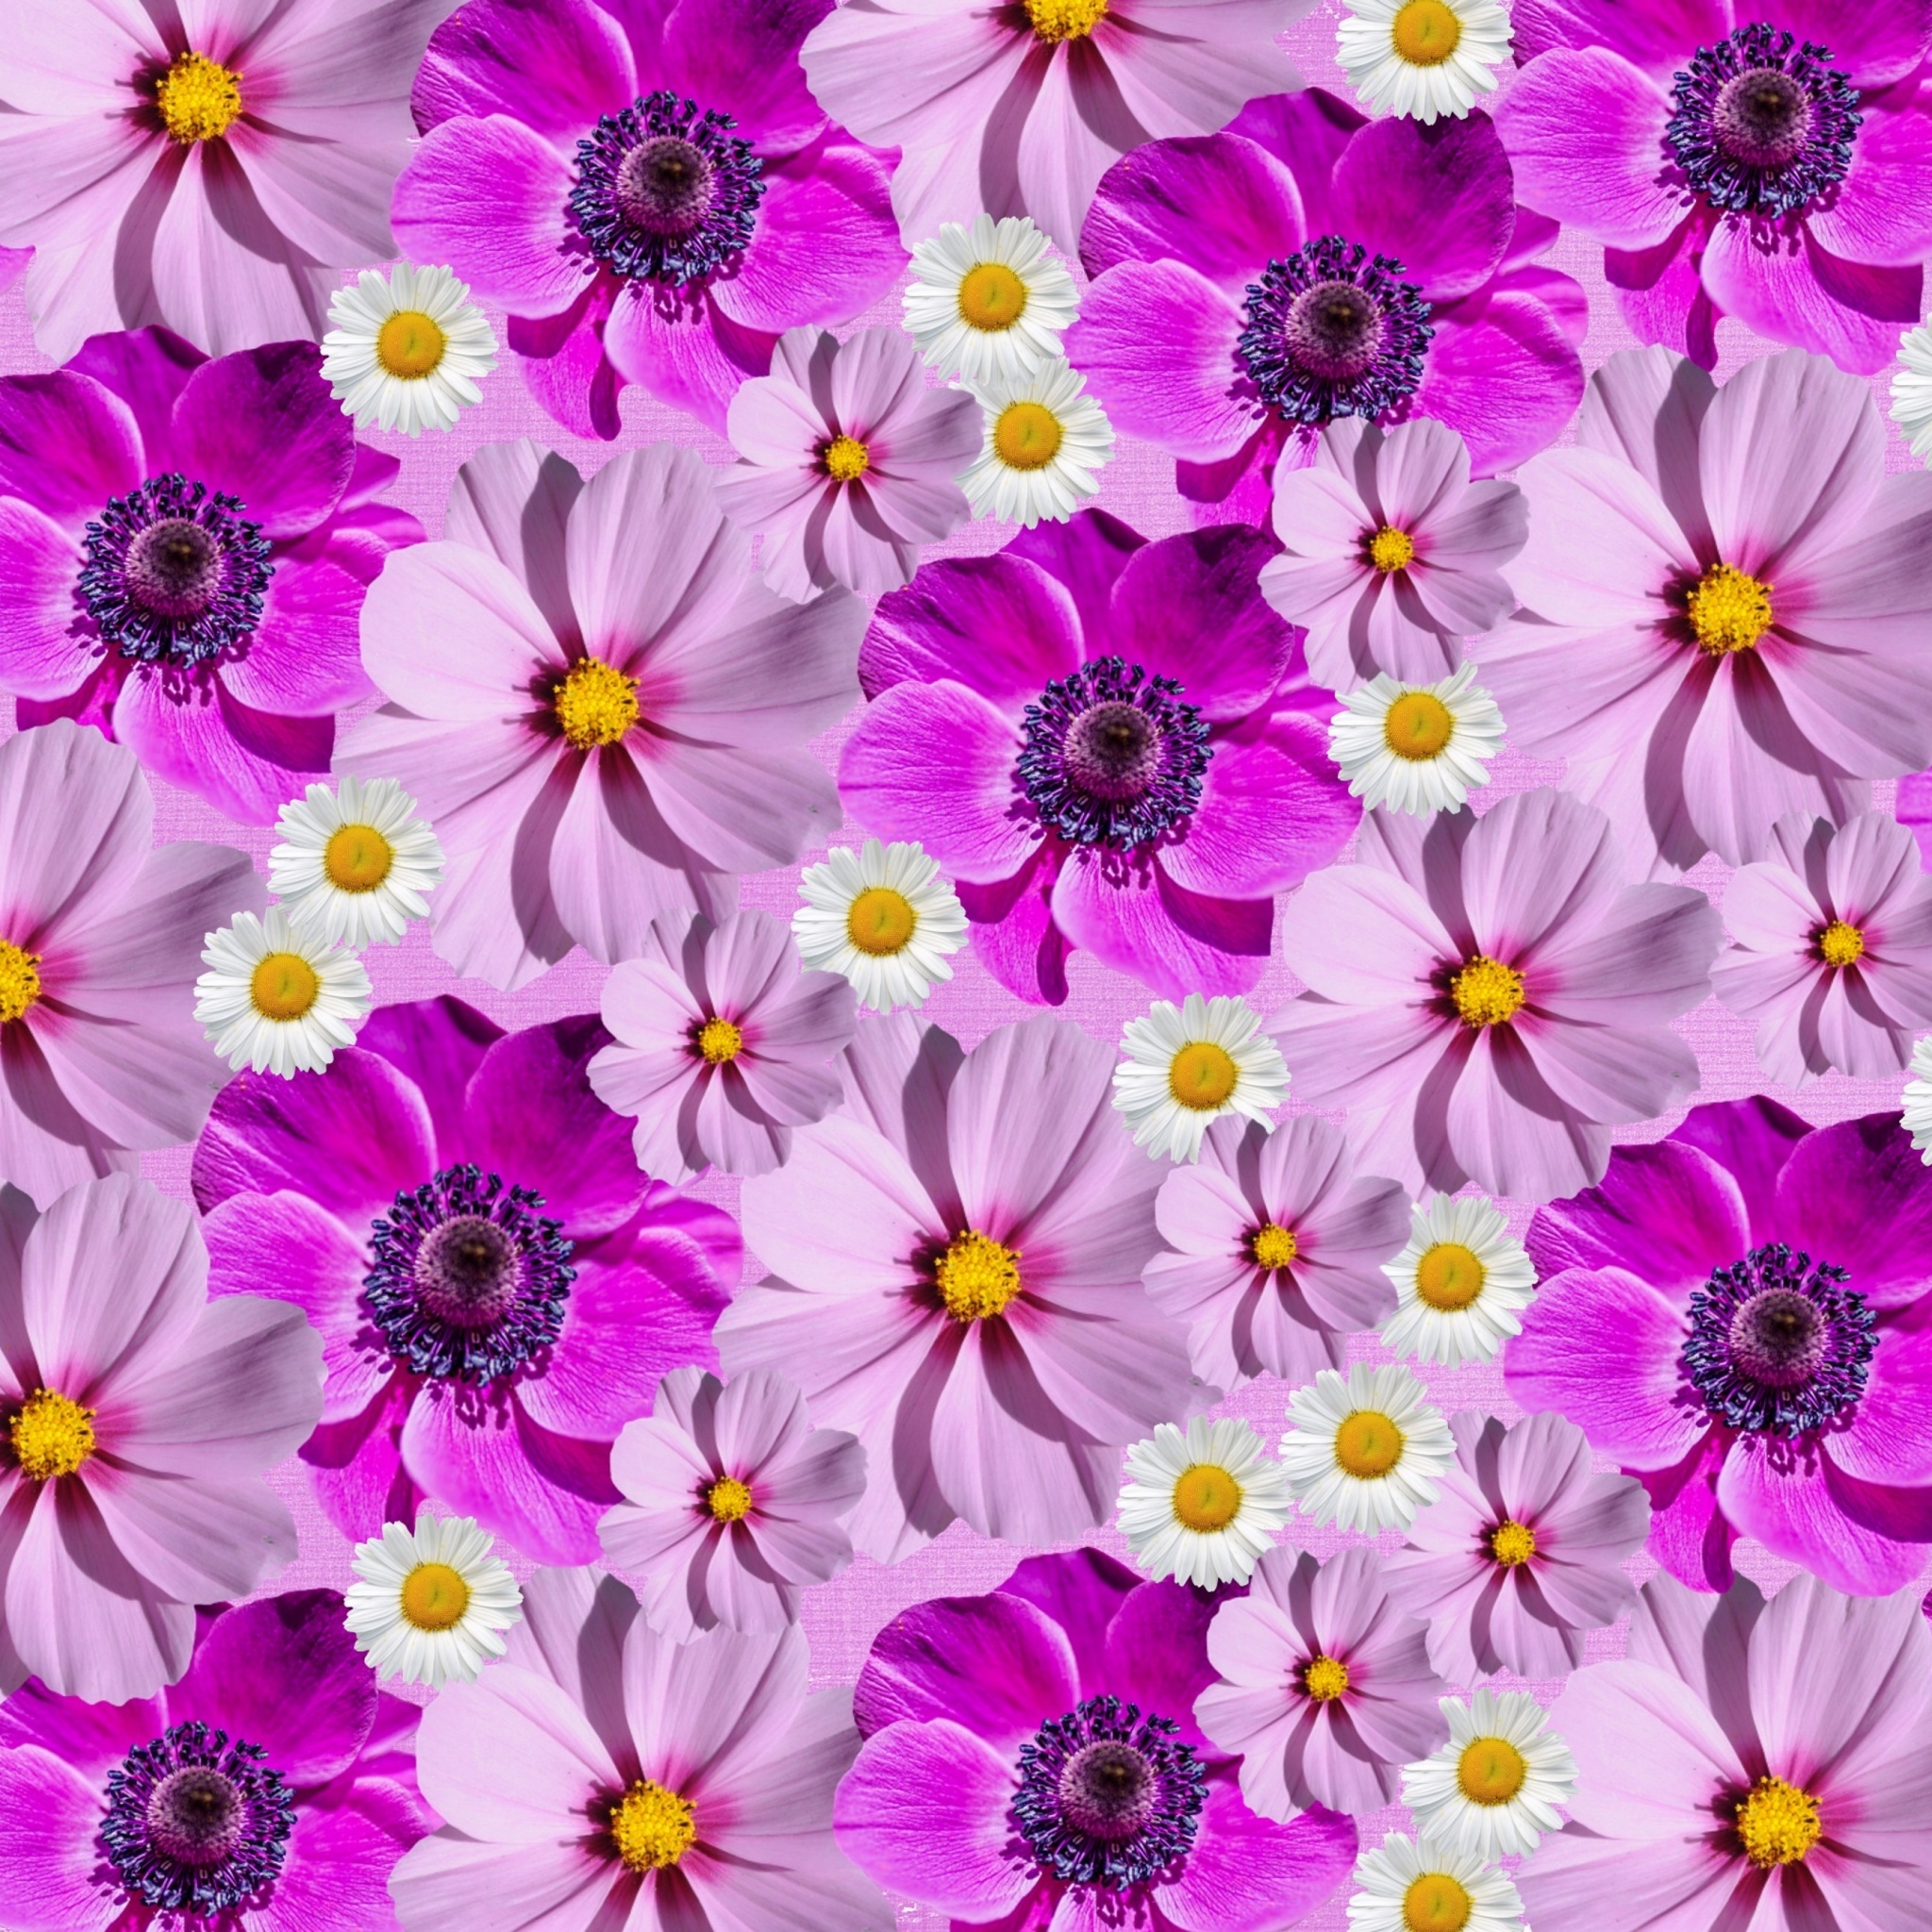 beautiful flower backgrounds